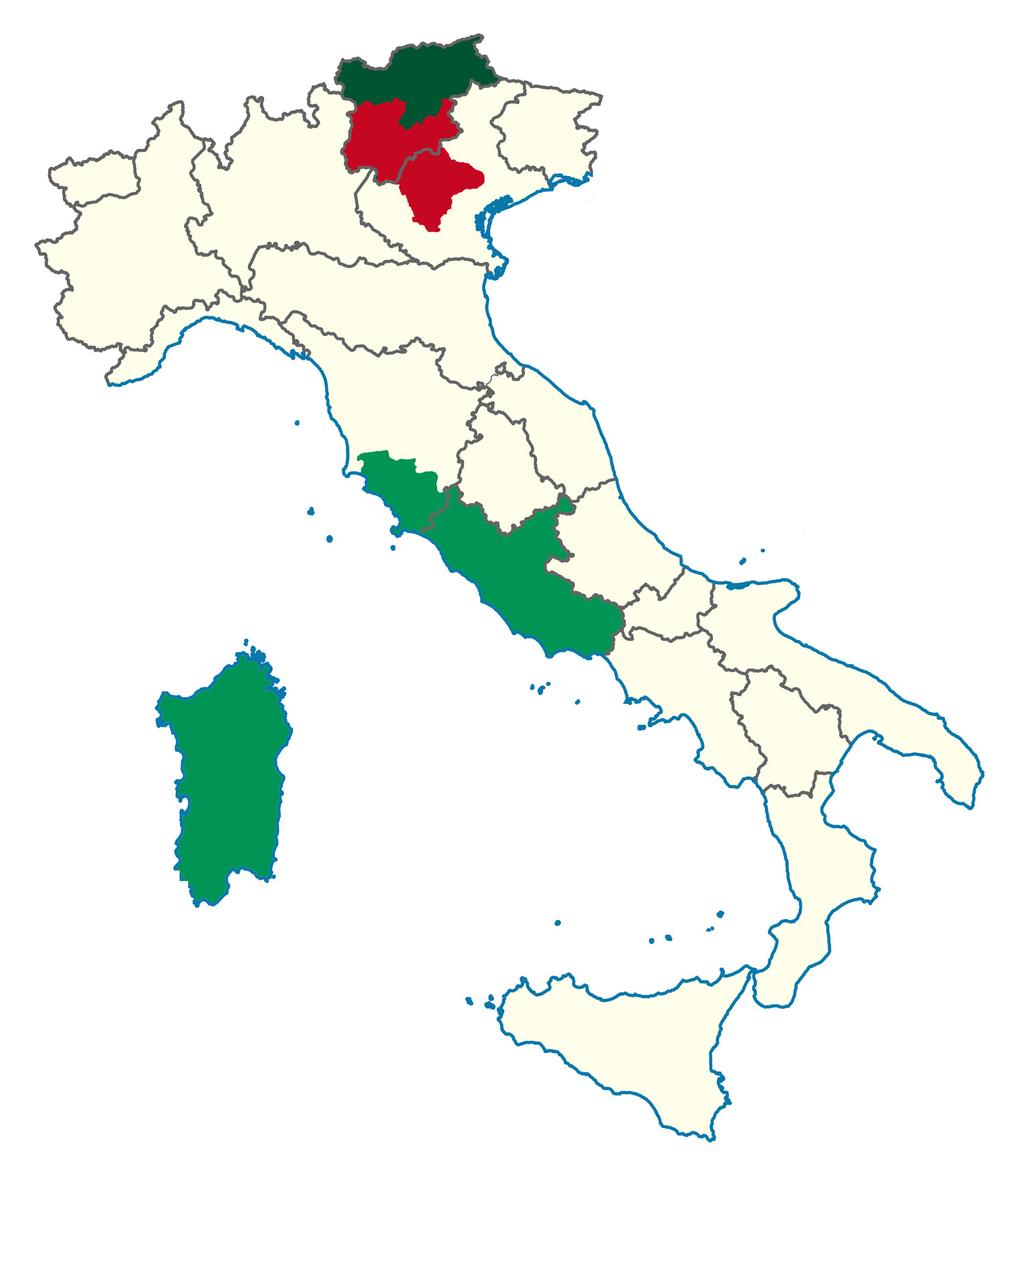 SPECK ALTO ADIGE PGI Made exclusively in the Alto Adige / South Tyrol (Südtirol in German), where Alpine and Mediterranean